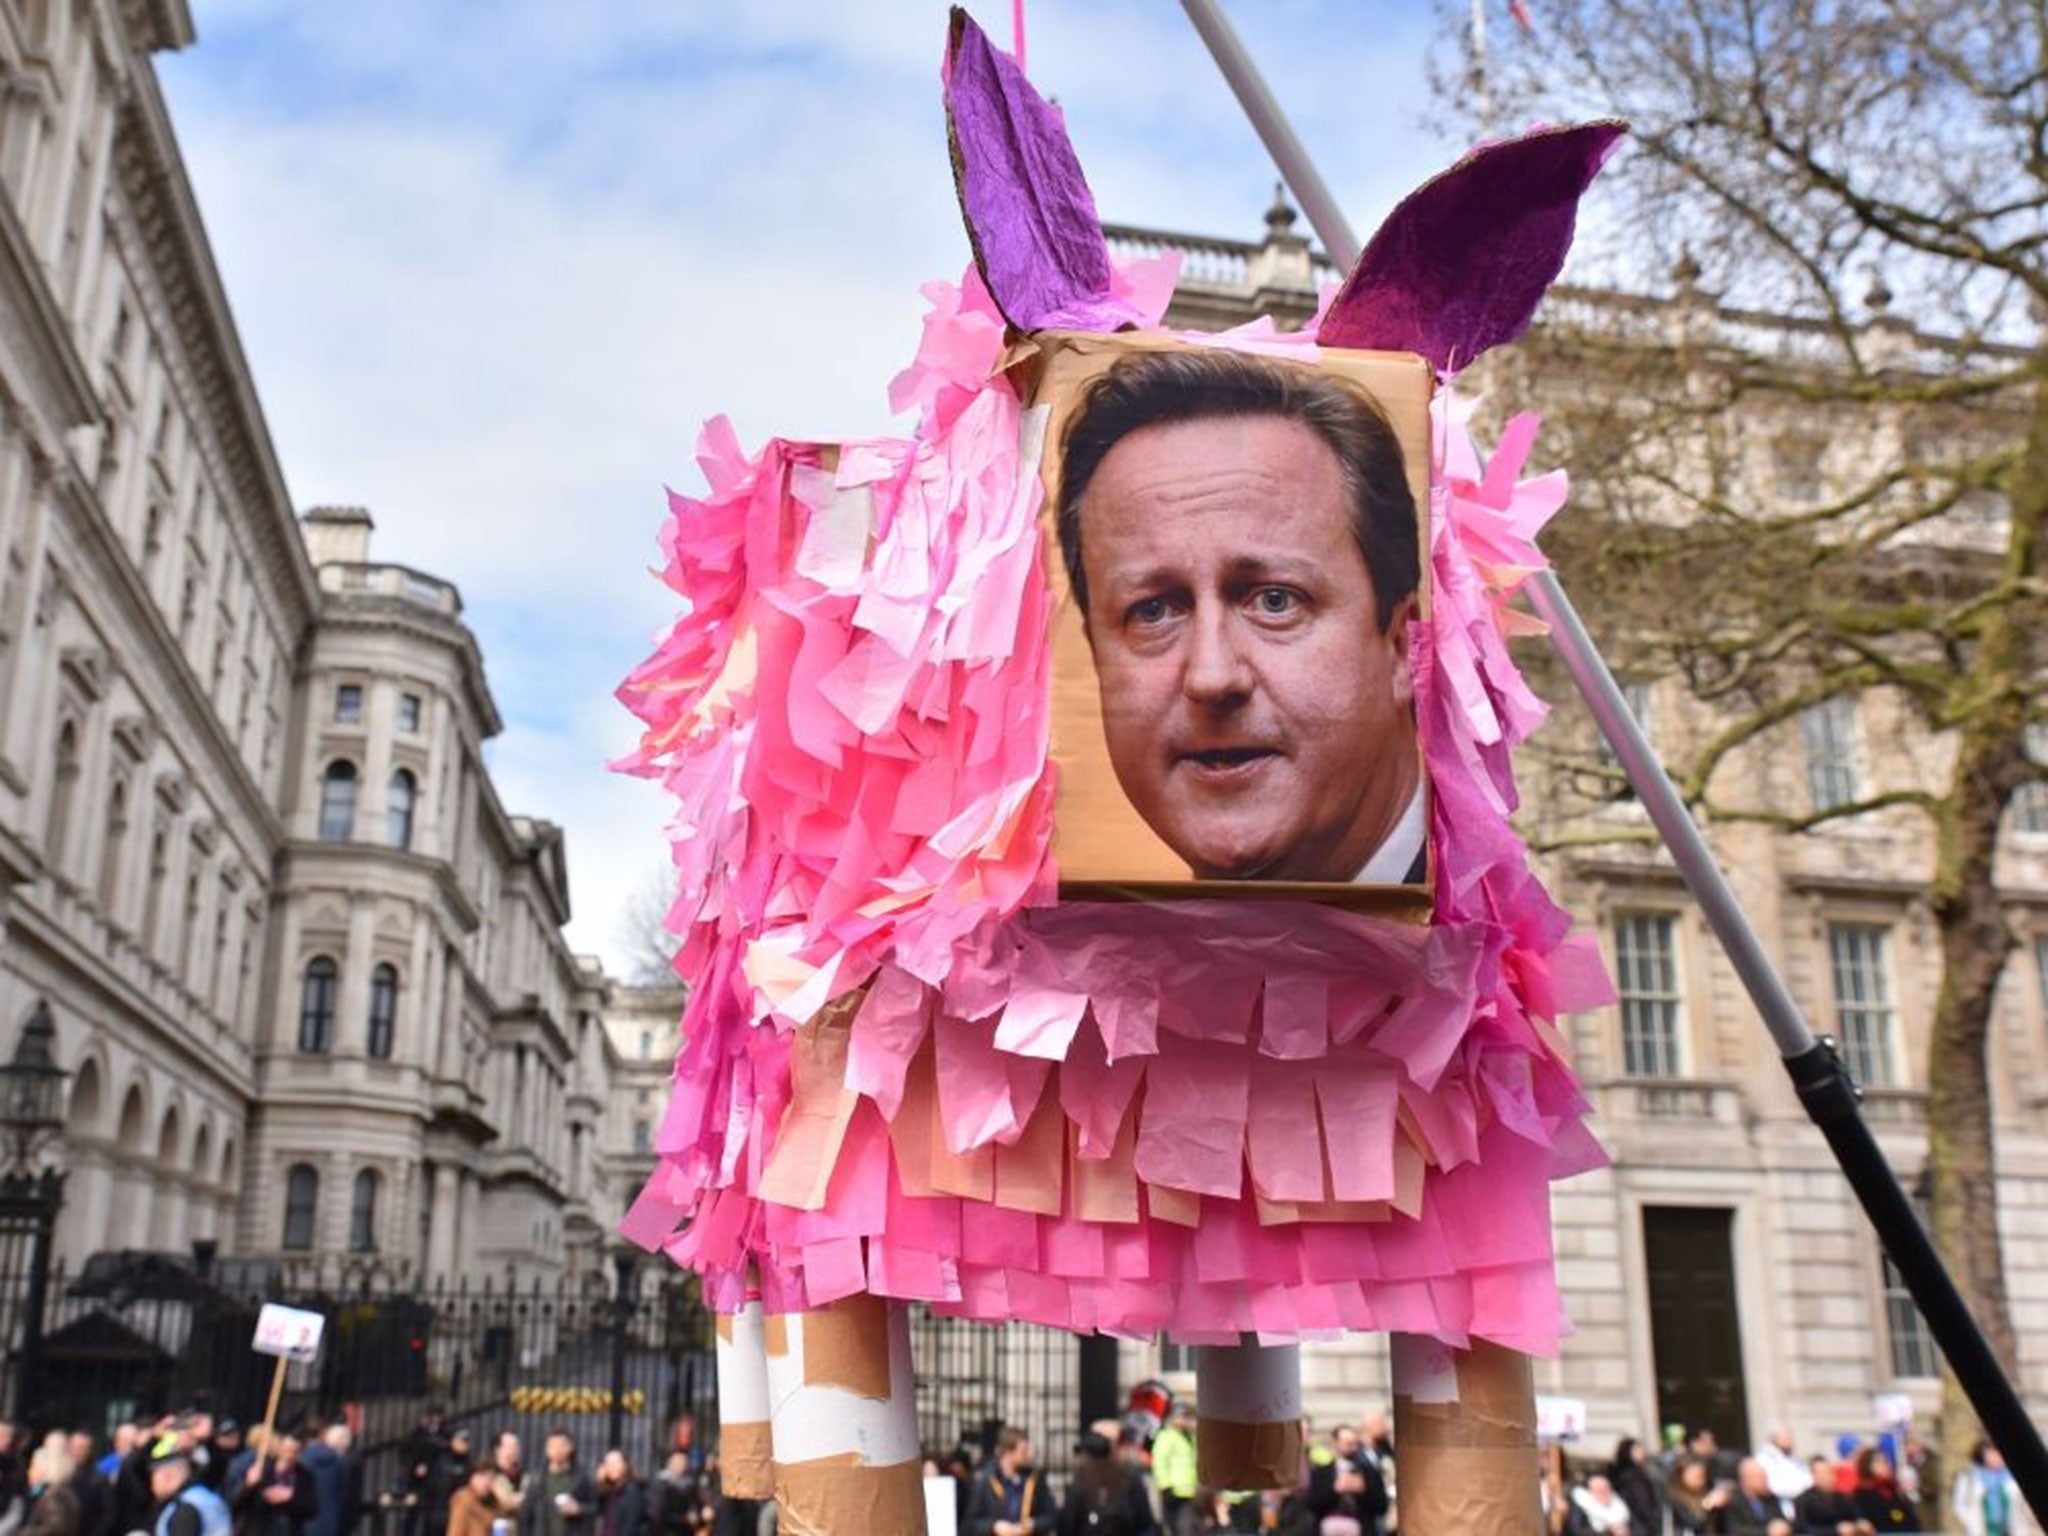 David Cameron pig sculpture besides Downing Street